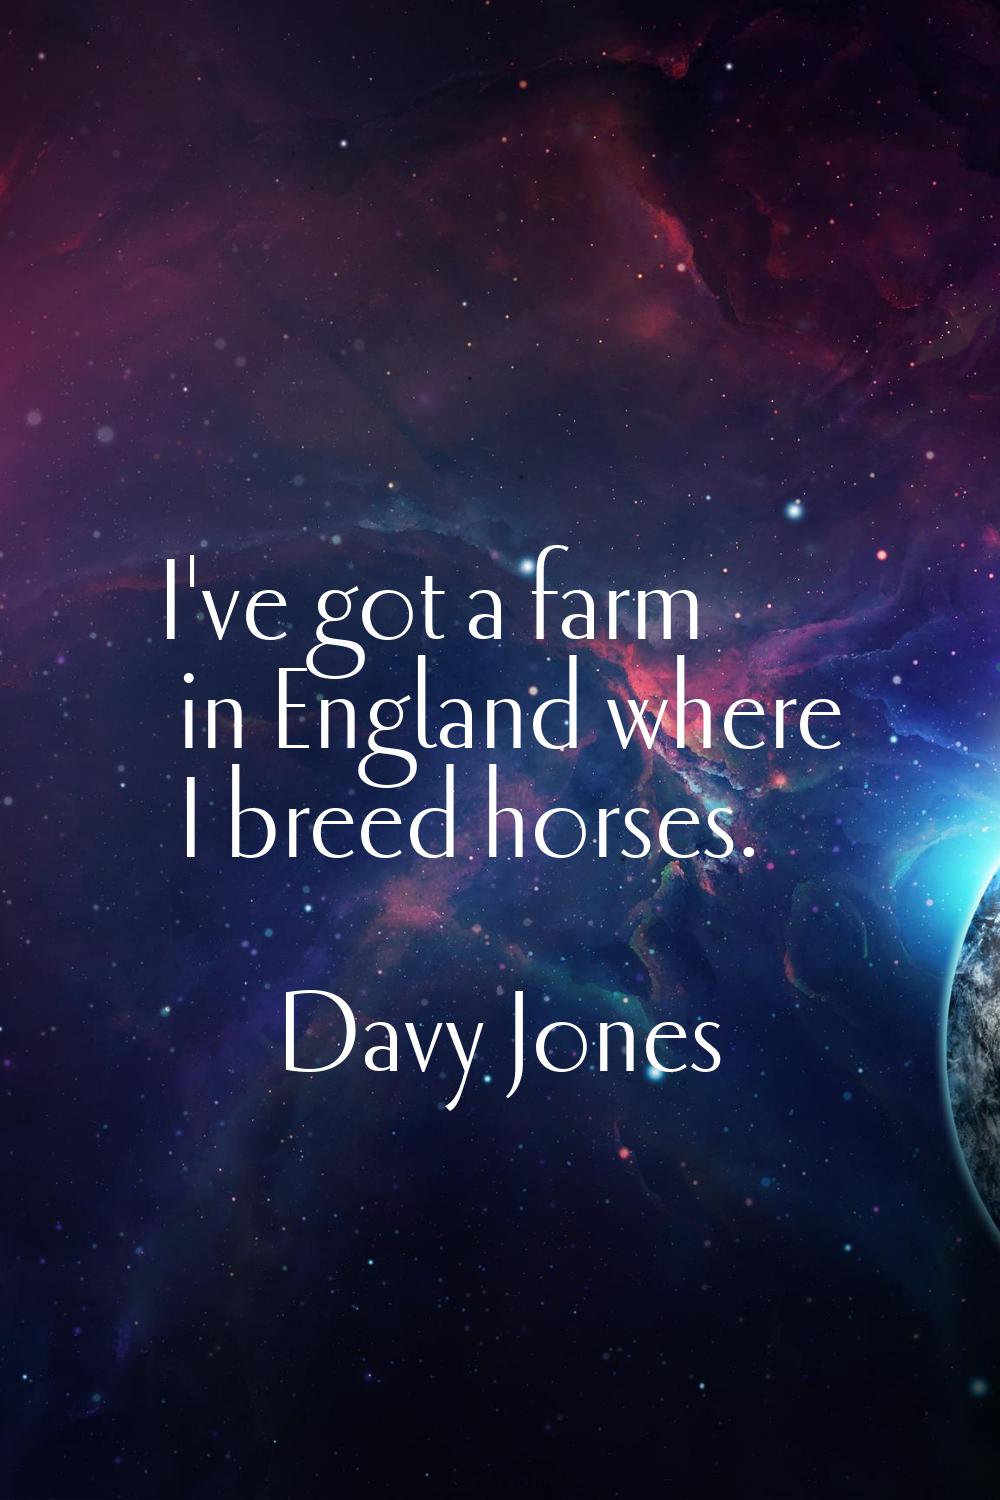 I've got a farm in England where I breed horses.